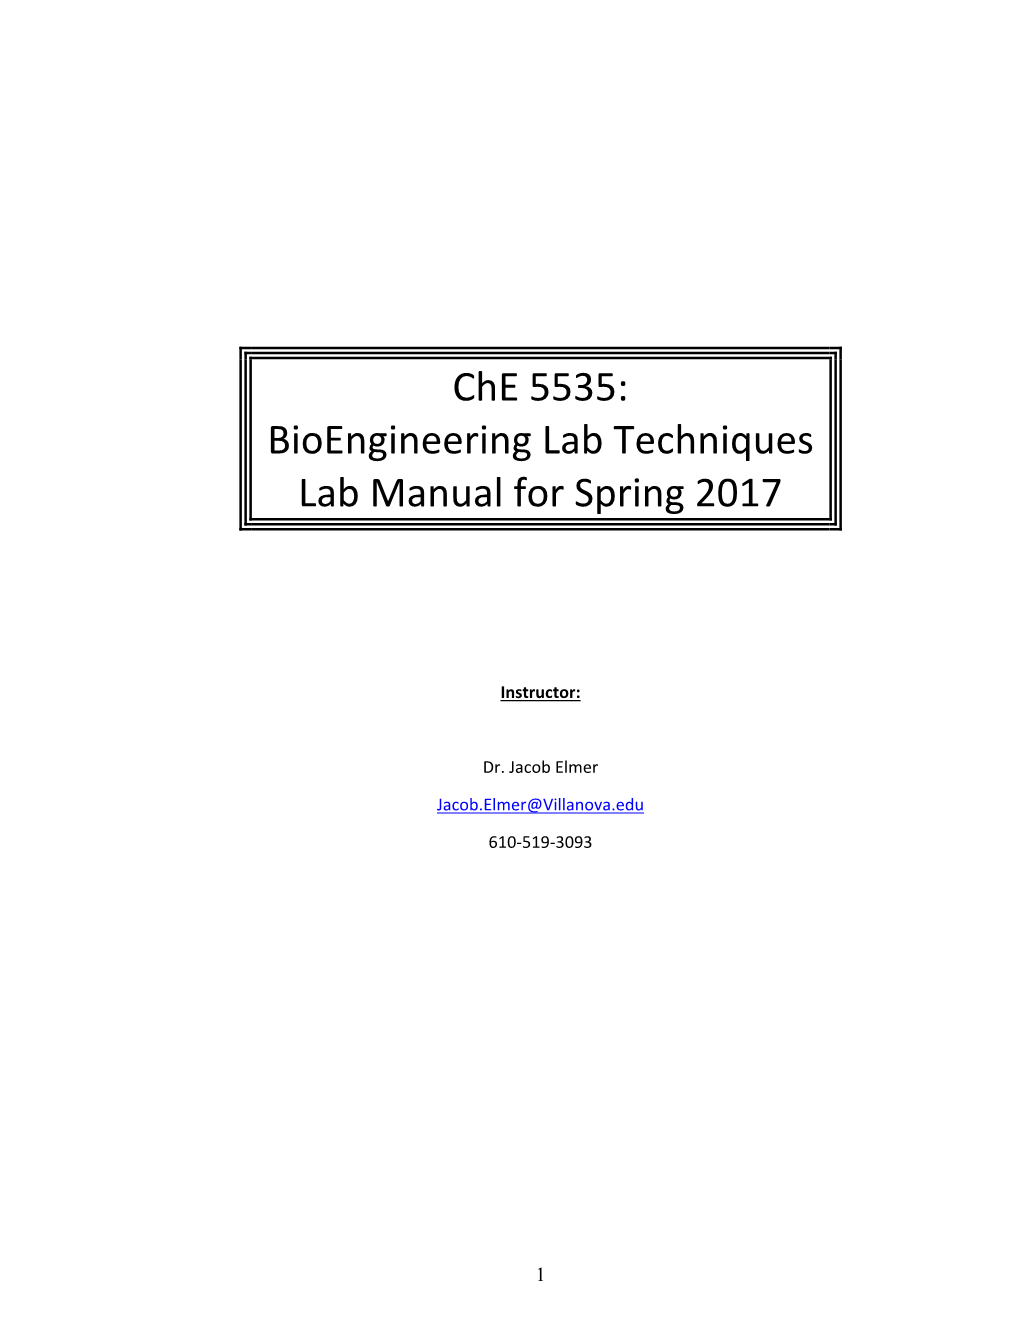 Bioengineering Lab Techniques Lab Manual for Spring 2017